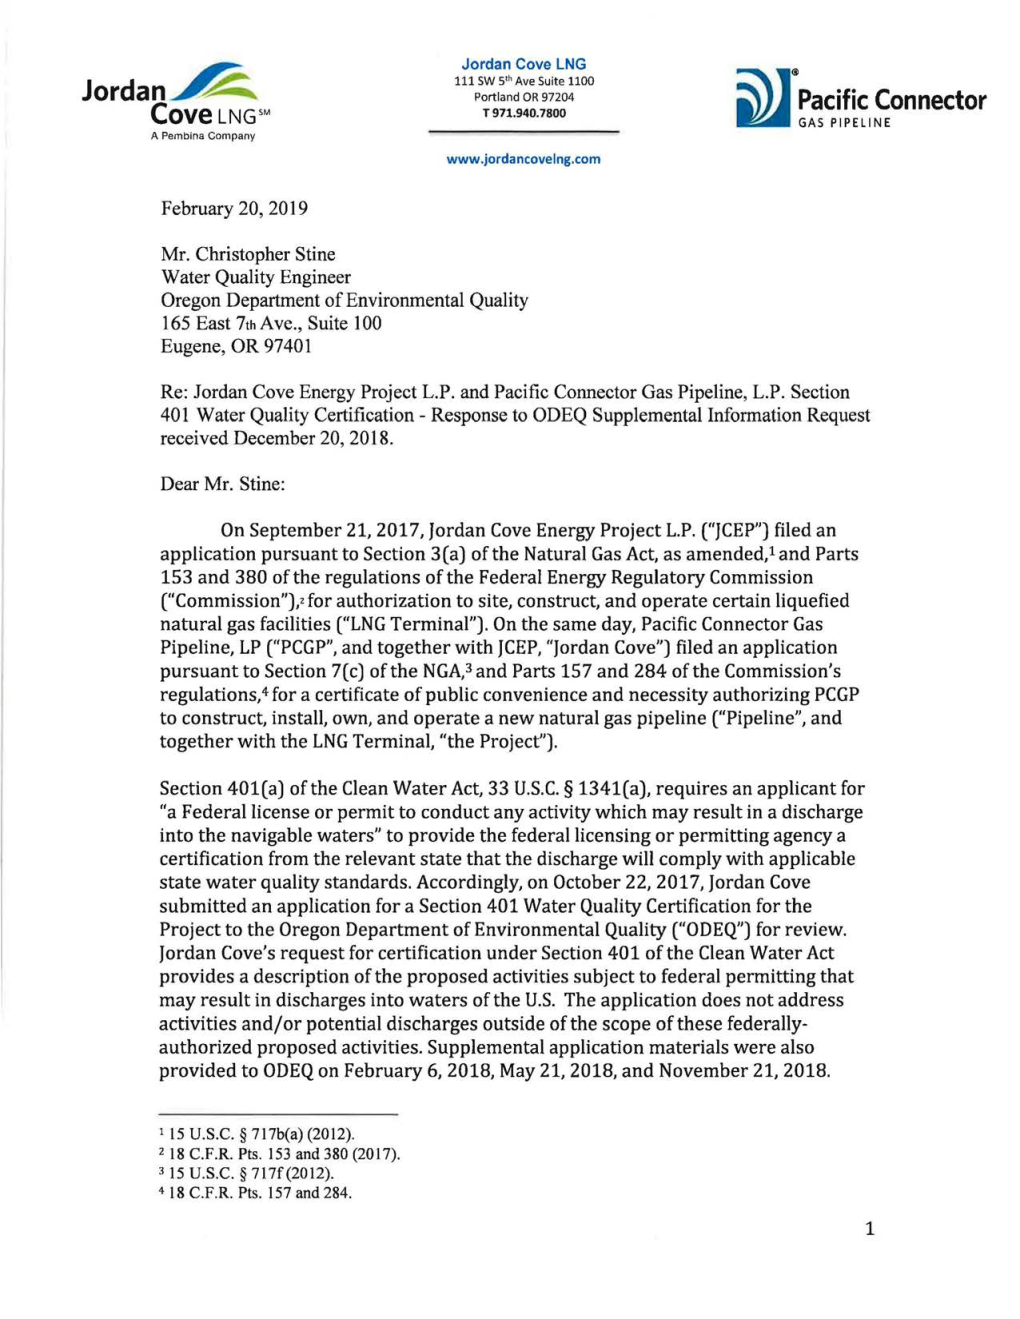 JCEP Response Dated Feb. 20, 2019